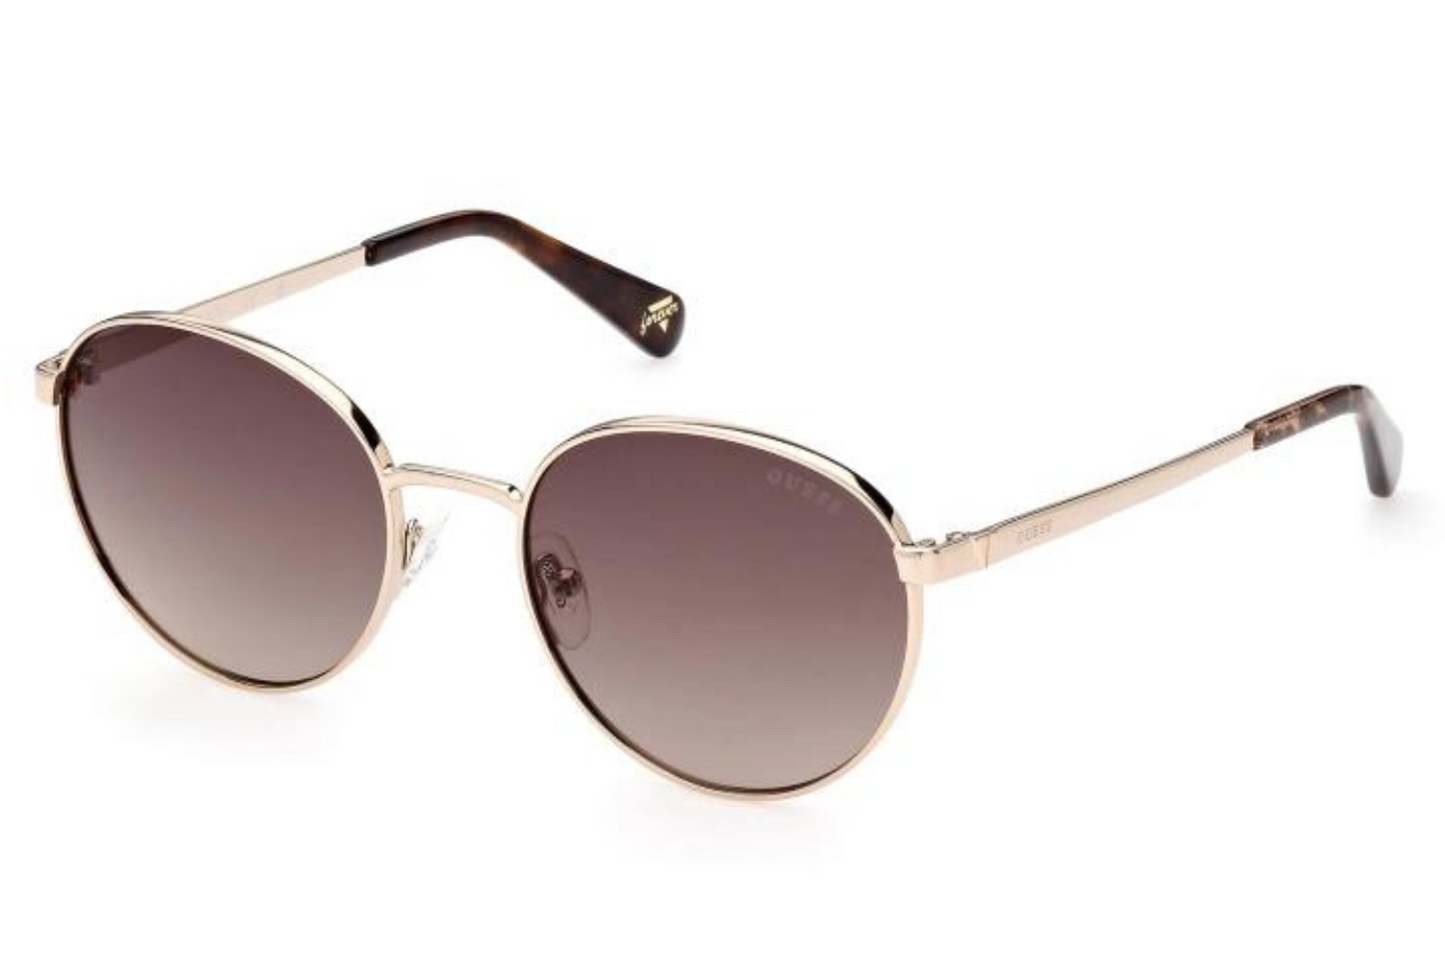 Guess Sunglasses S5214